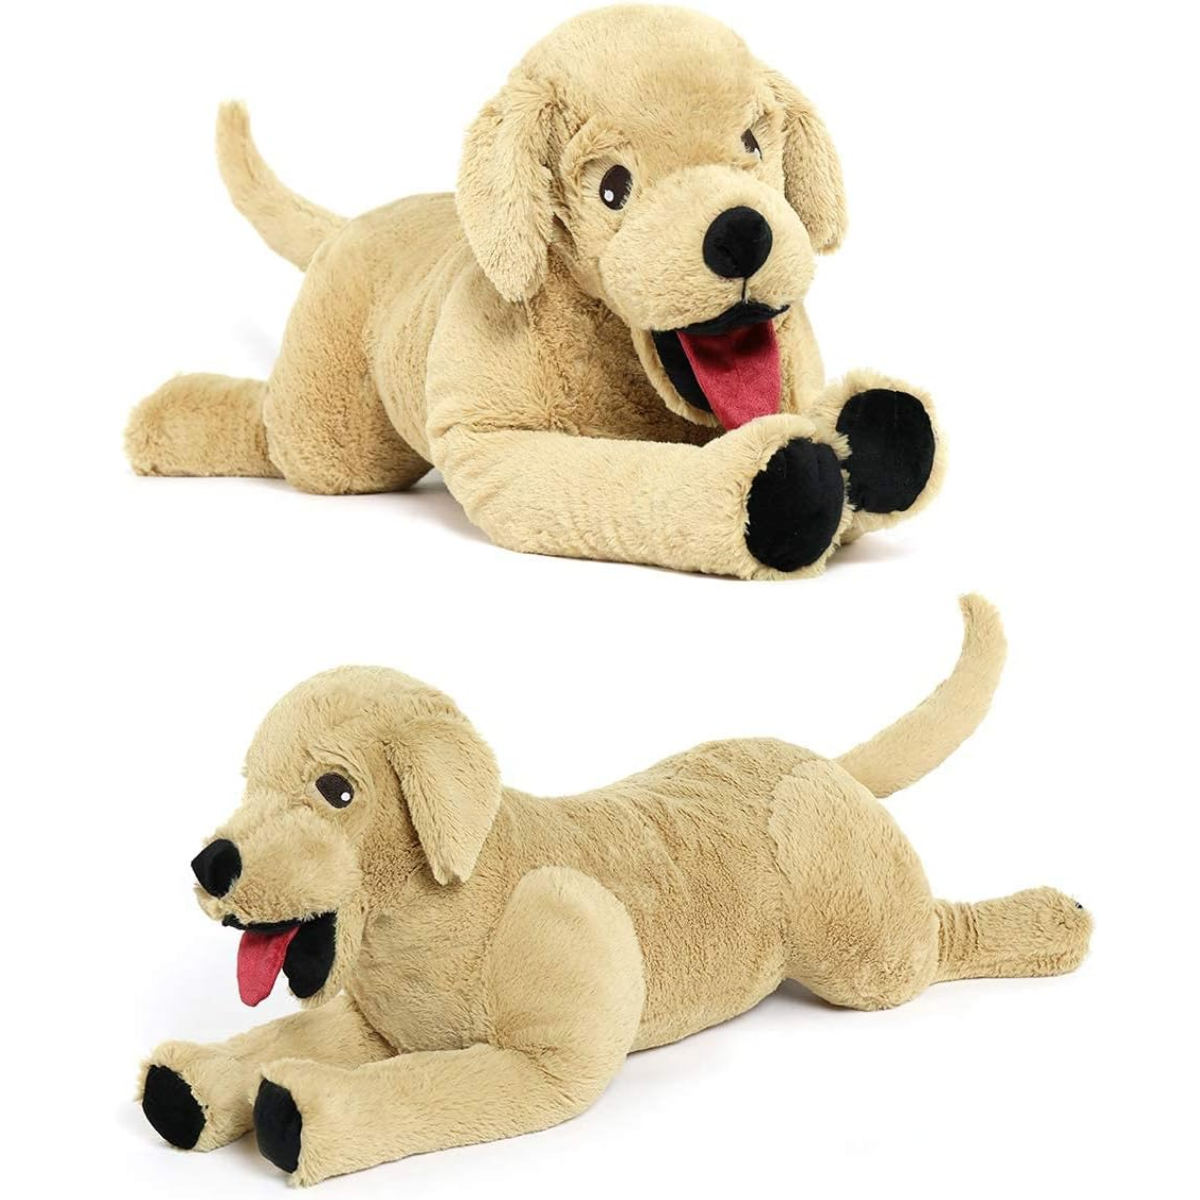 MorisMos Dog Stuffed Animal Toy, Light Brown